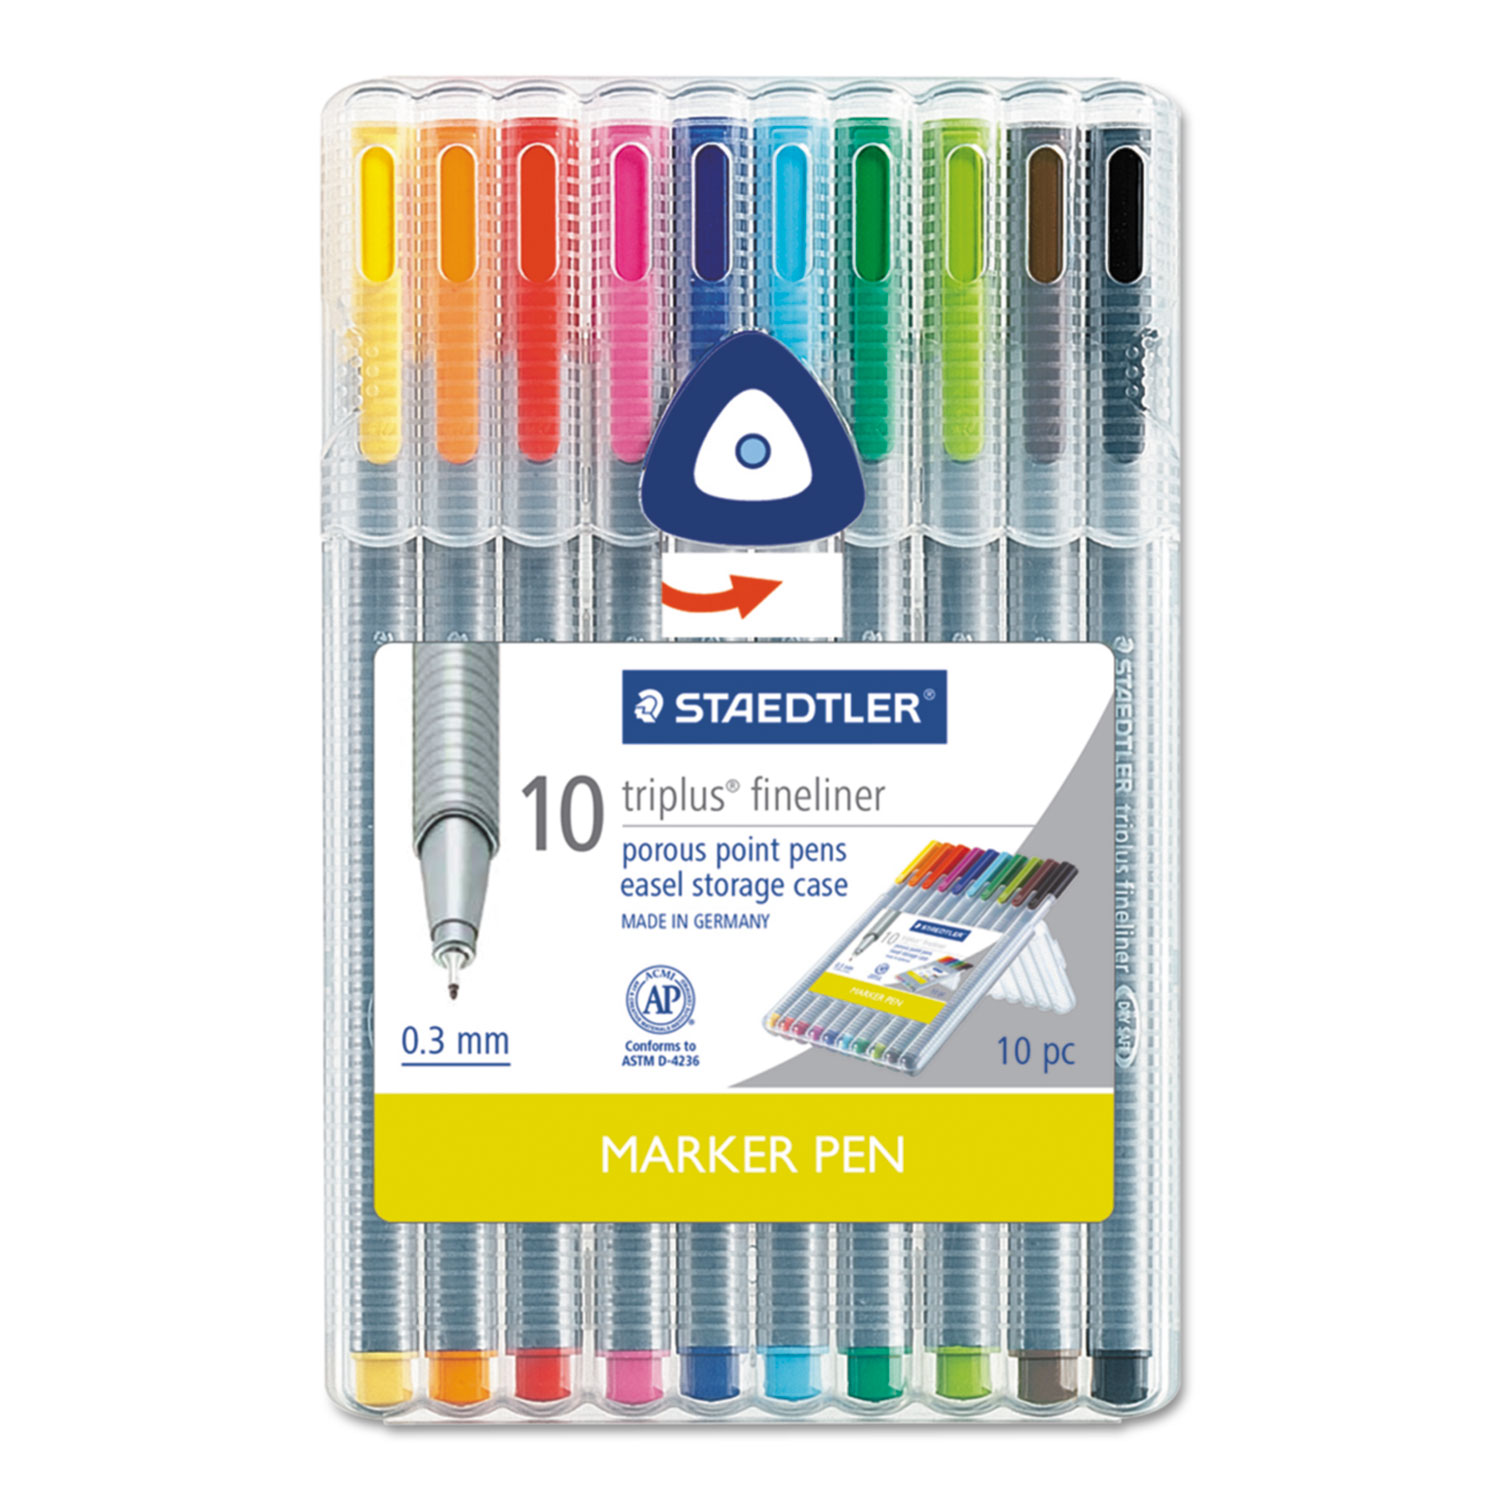  Staedtler 334 SB10A6 Triplus Fineliner Stick Porous Point Pen, Extra-Fine Needle Tip, 0.3mm, Assorted Ink, Silver Barrel, 10/Set (STD334SB10A6) 